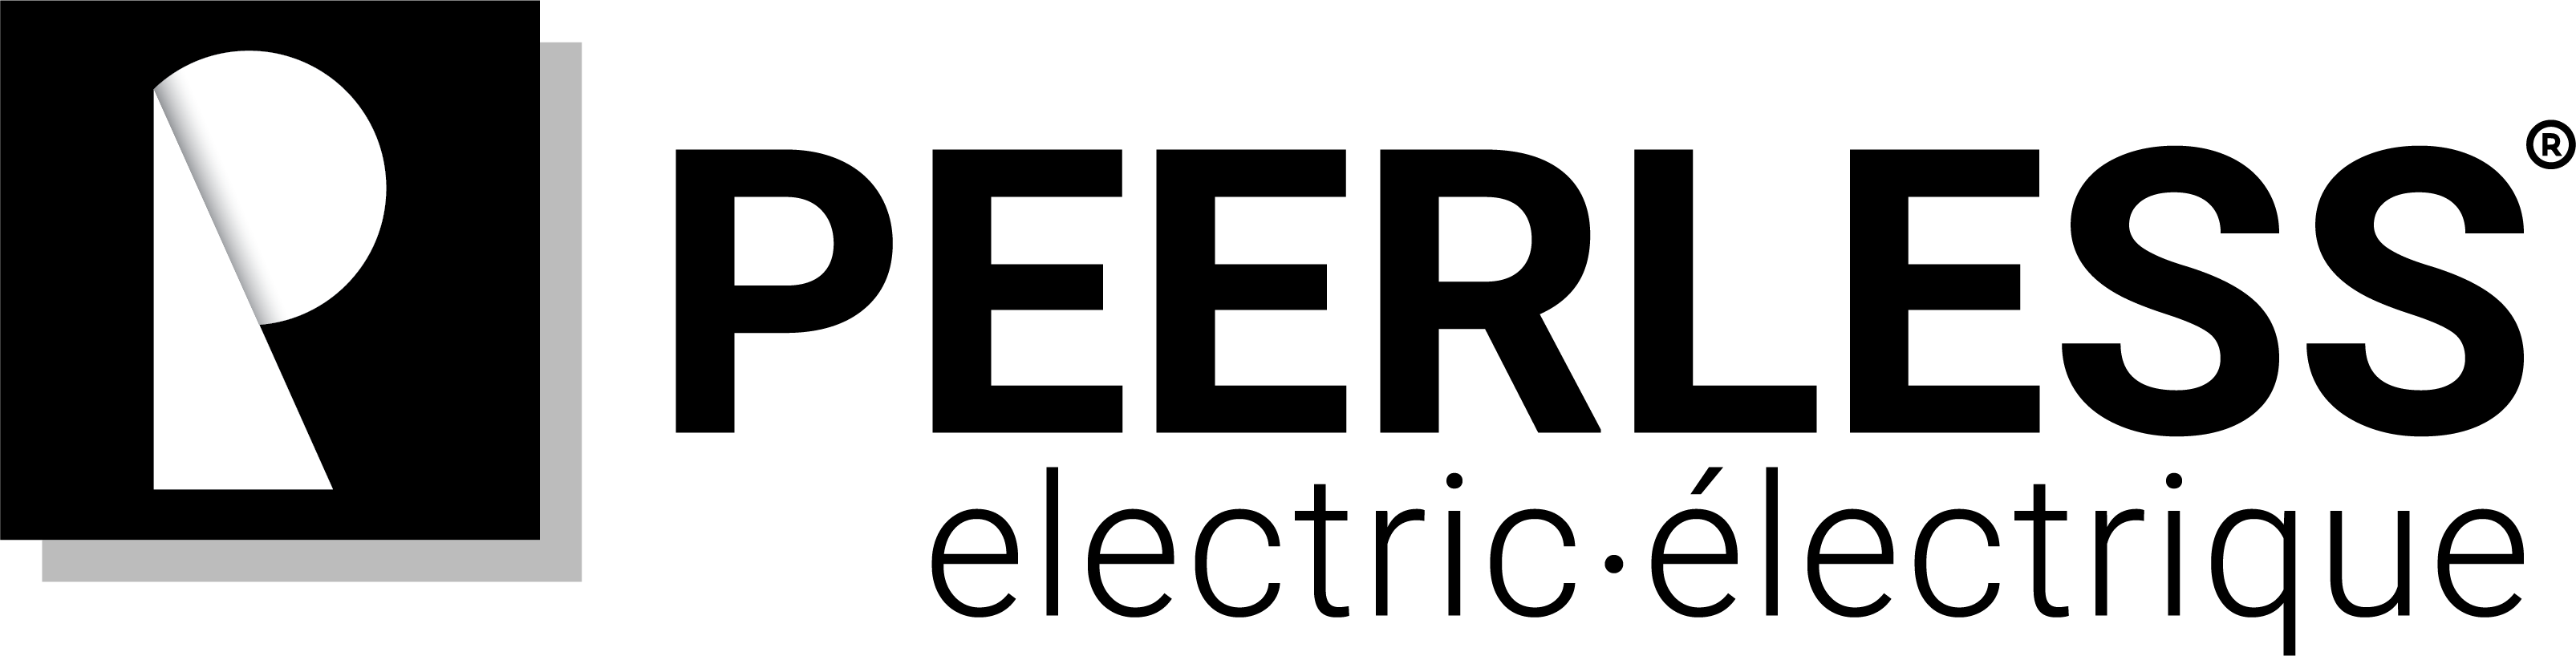 peerless electric logo